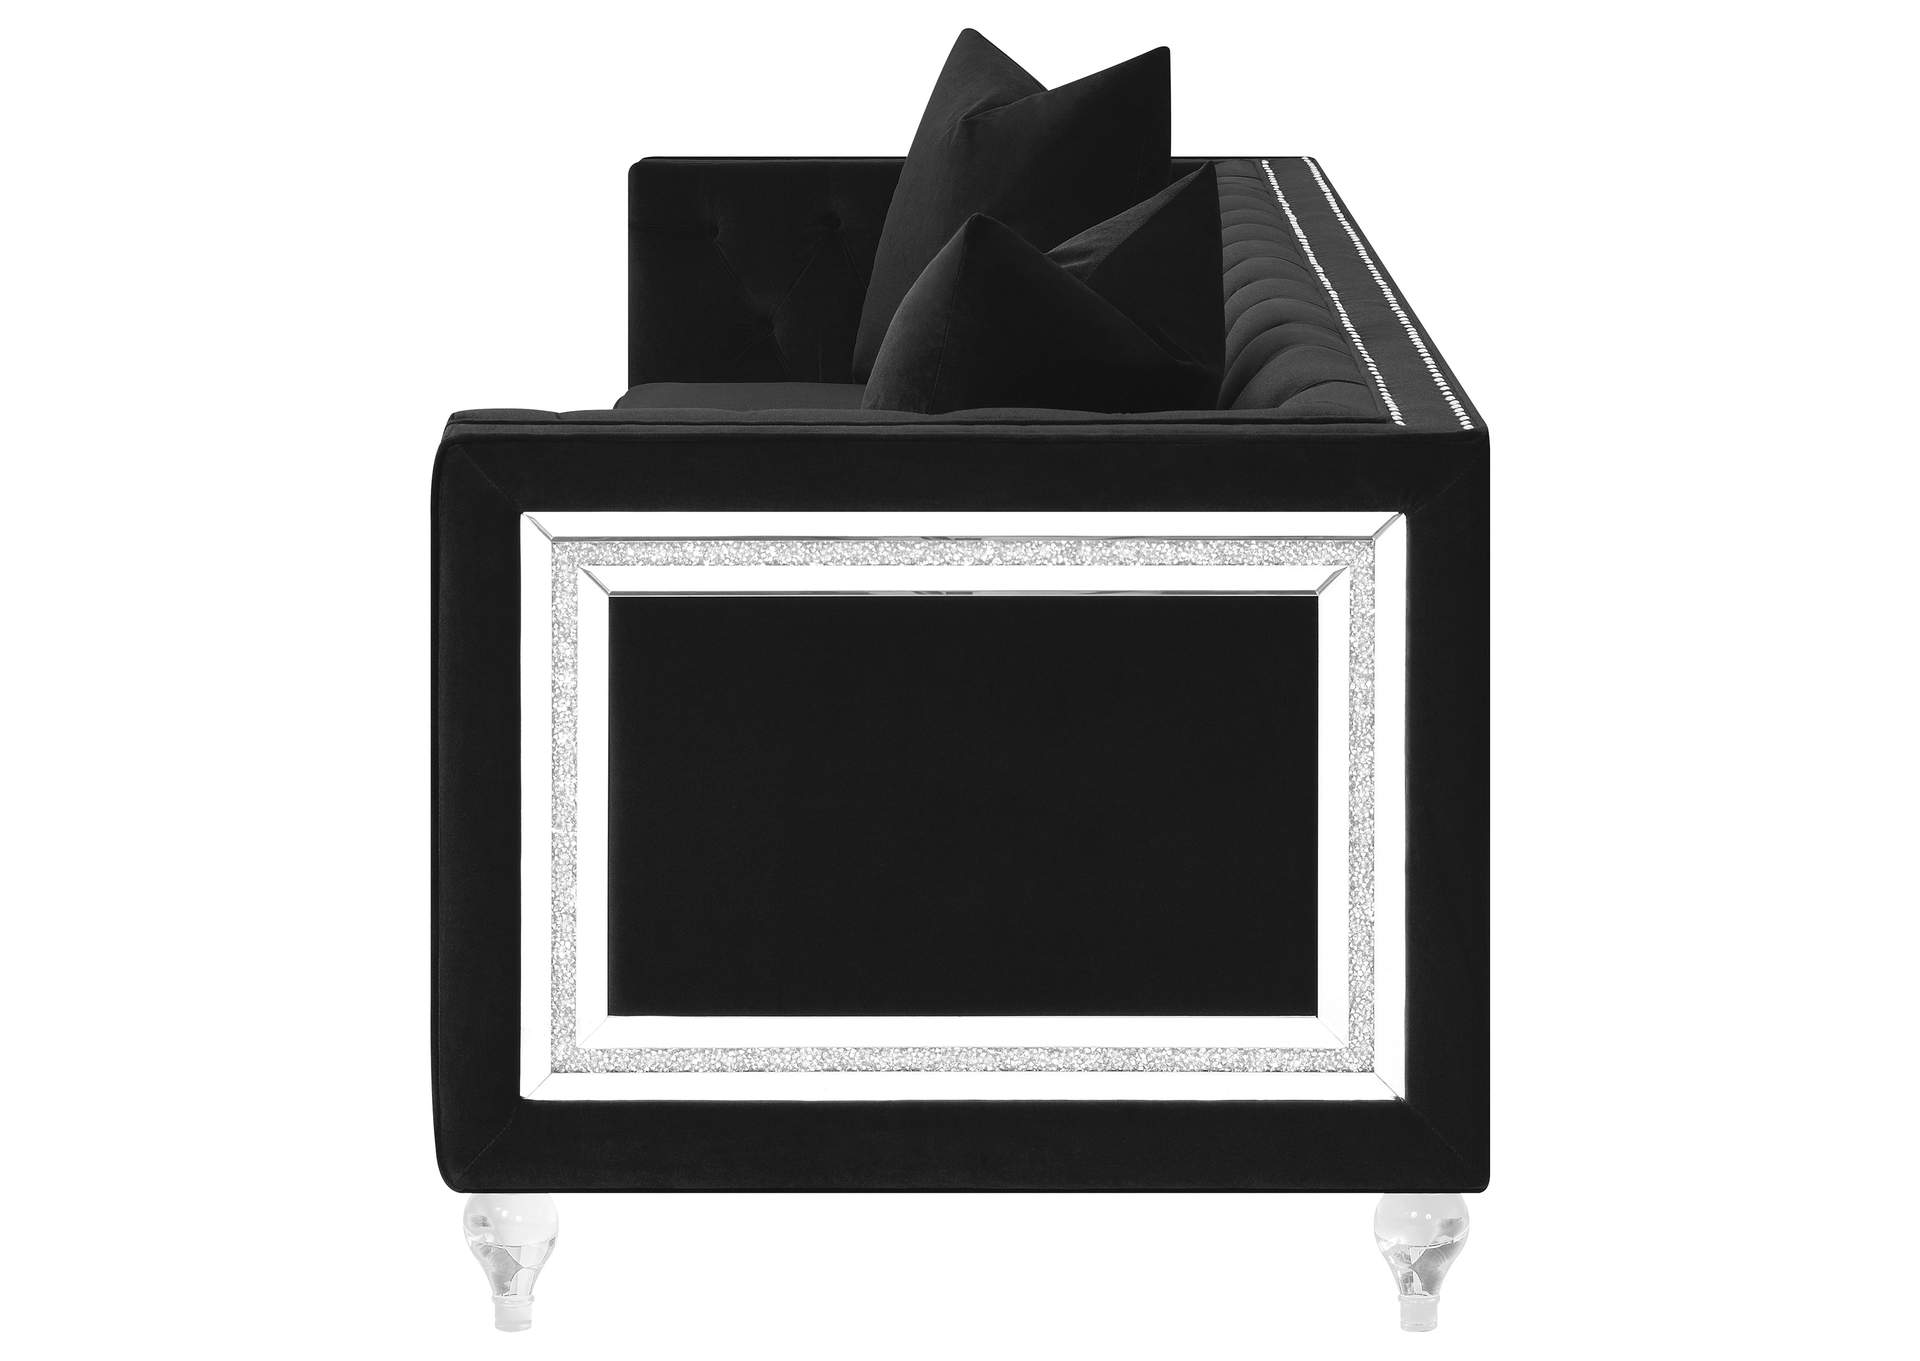 Delilah Upholstered Tufted Tuxedo Arm Sofa Black,Coaster Furniture